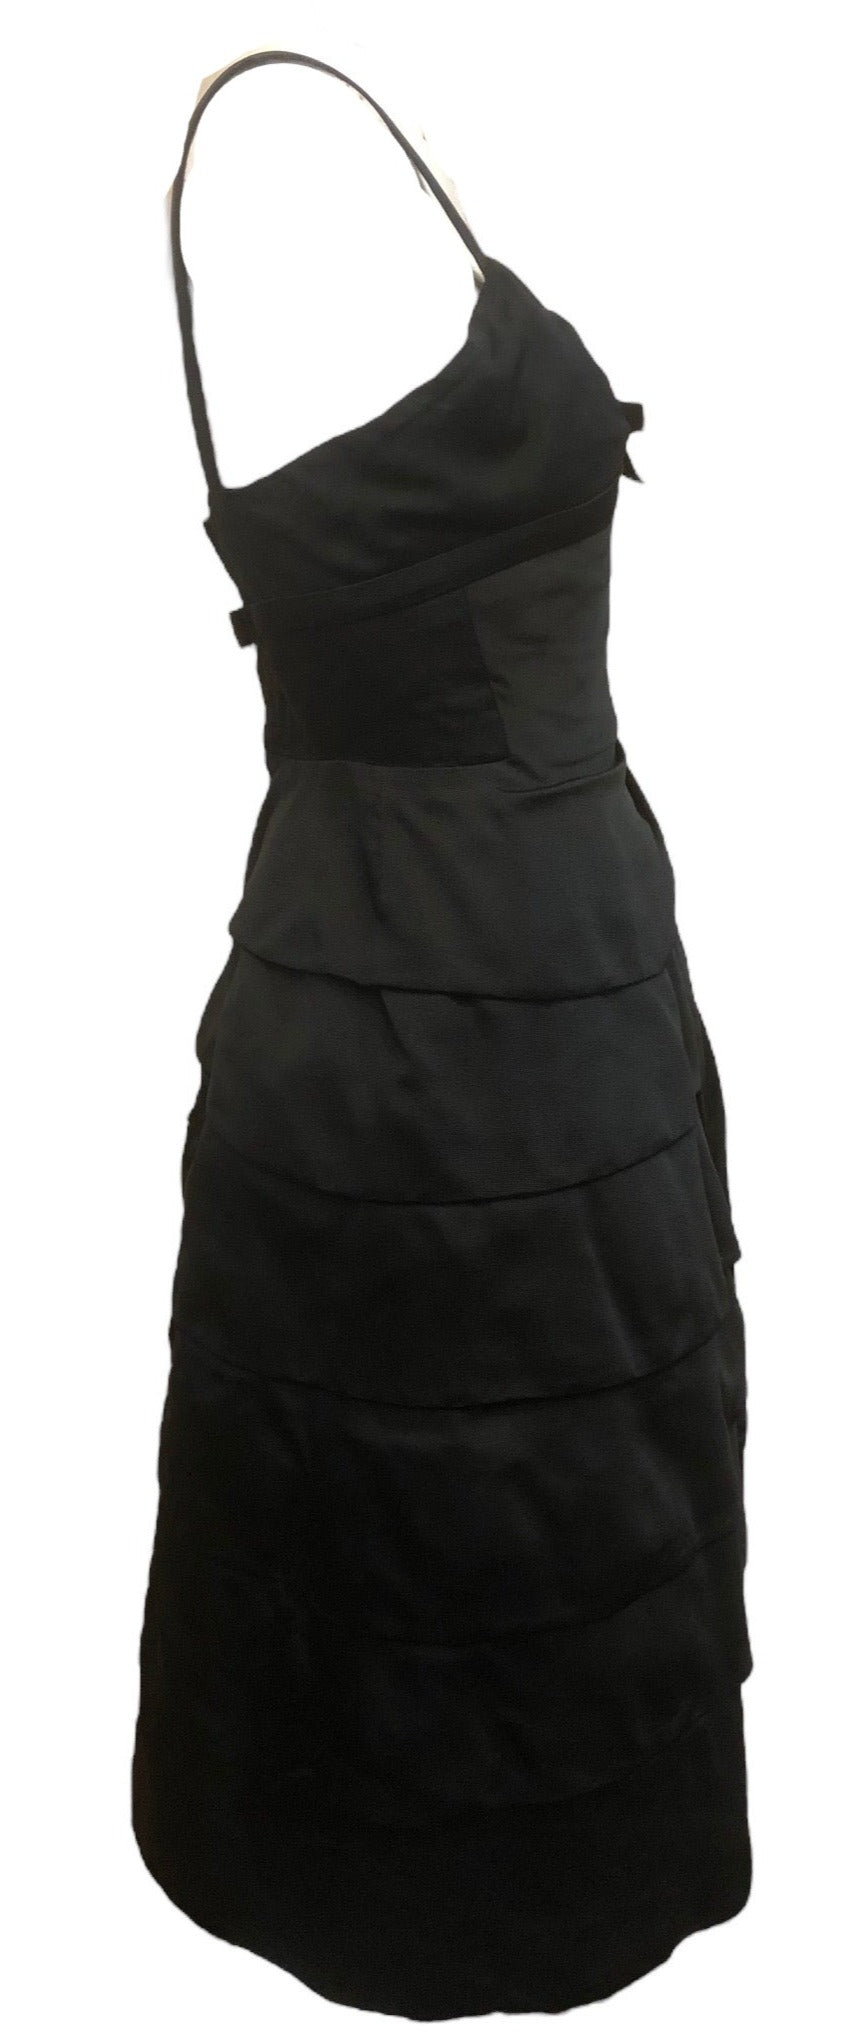  Mingolini Guggenheim 50s Black Faille Cocktail Dress SIDE 2 of 5